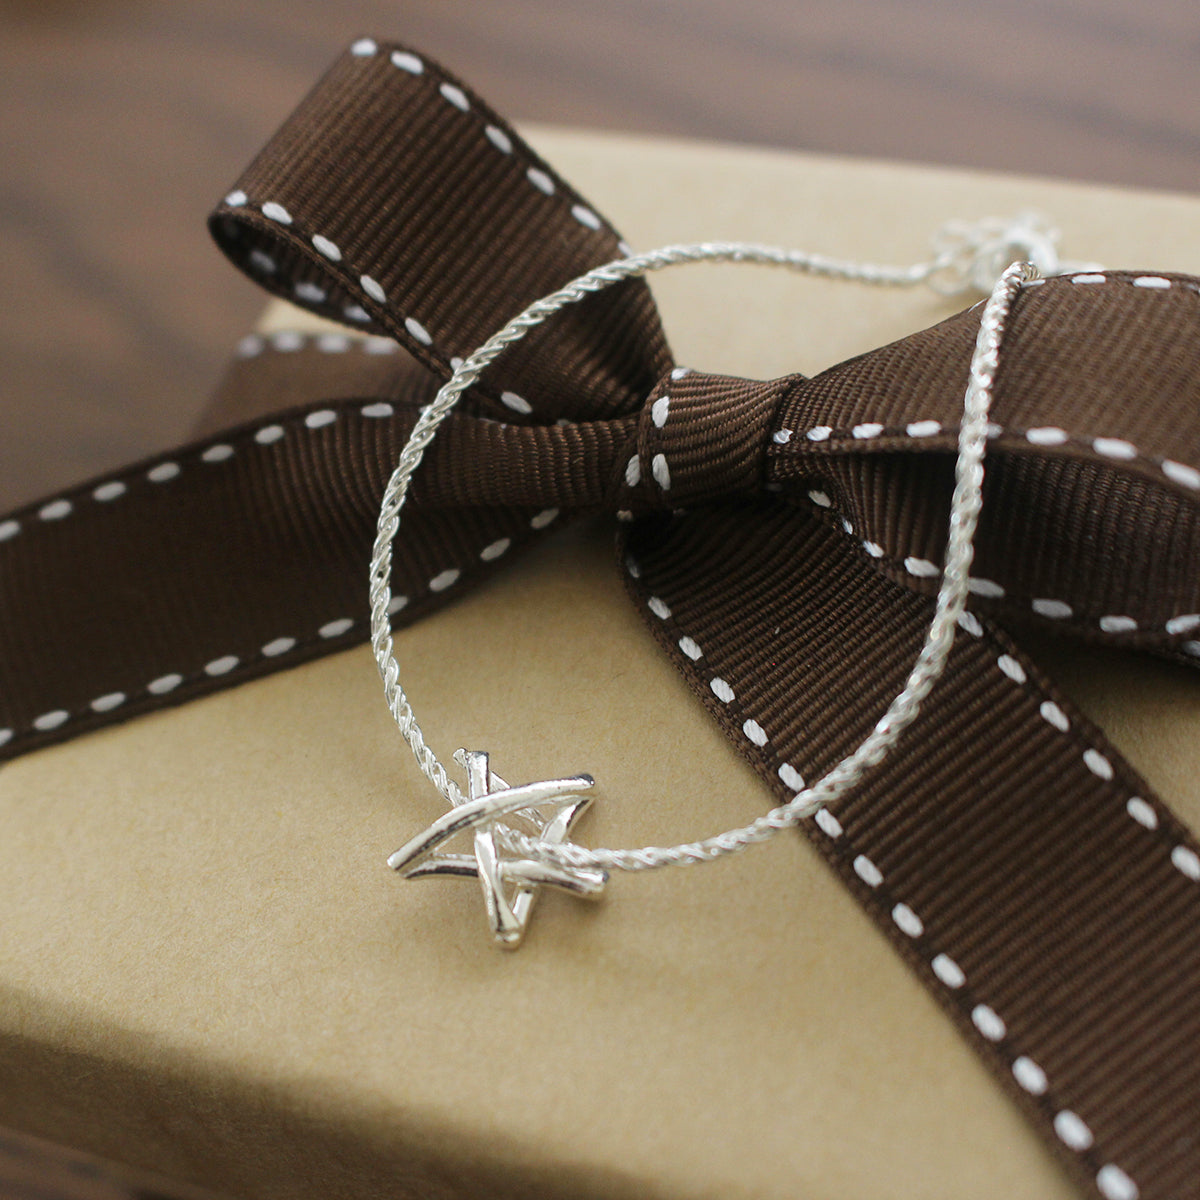 Teeny Tiny Match Star / Stick Star Bracelet in 925 silver